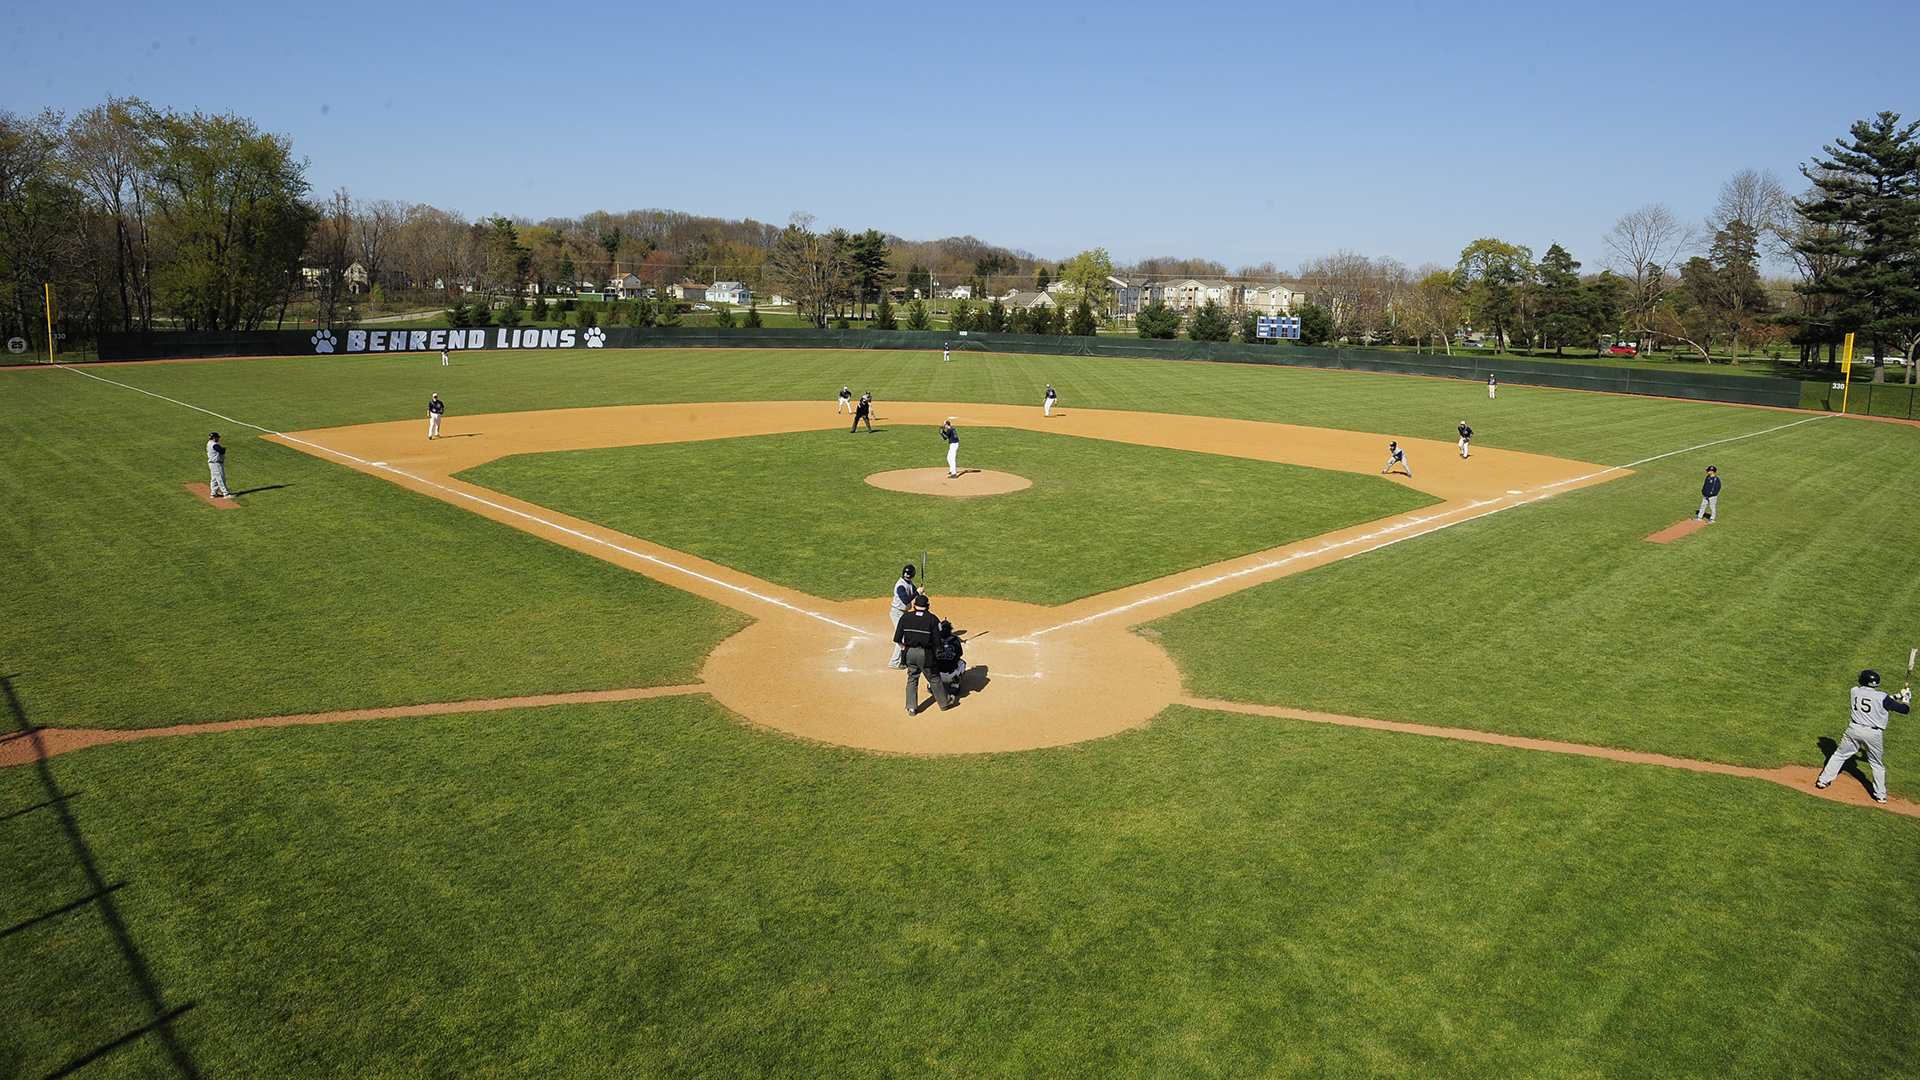 Behrend Baseball Field